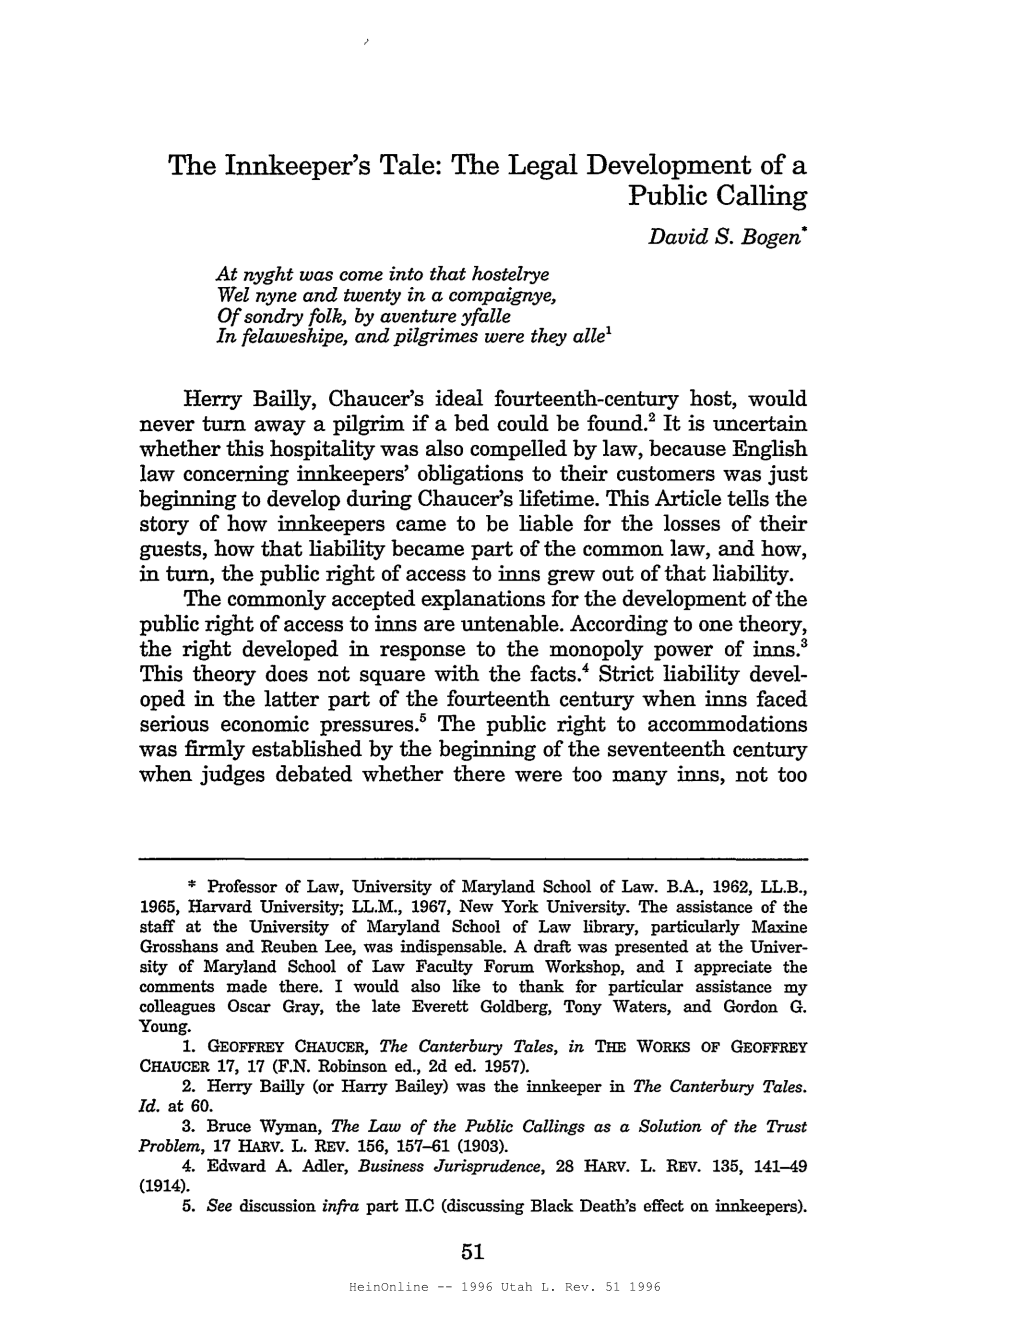 The Innkeeper's Tale: the Legal Development of a Public Calling David S